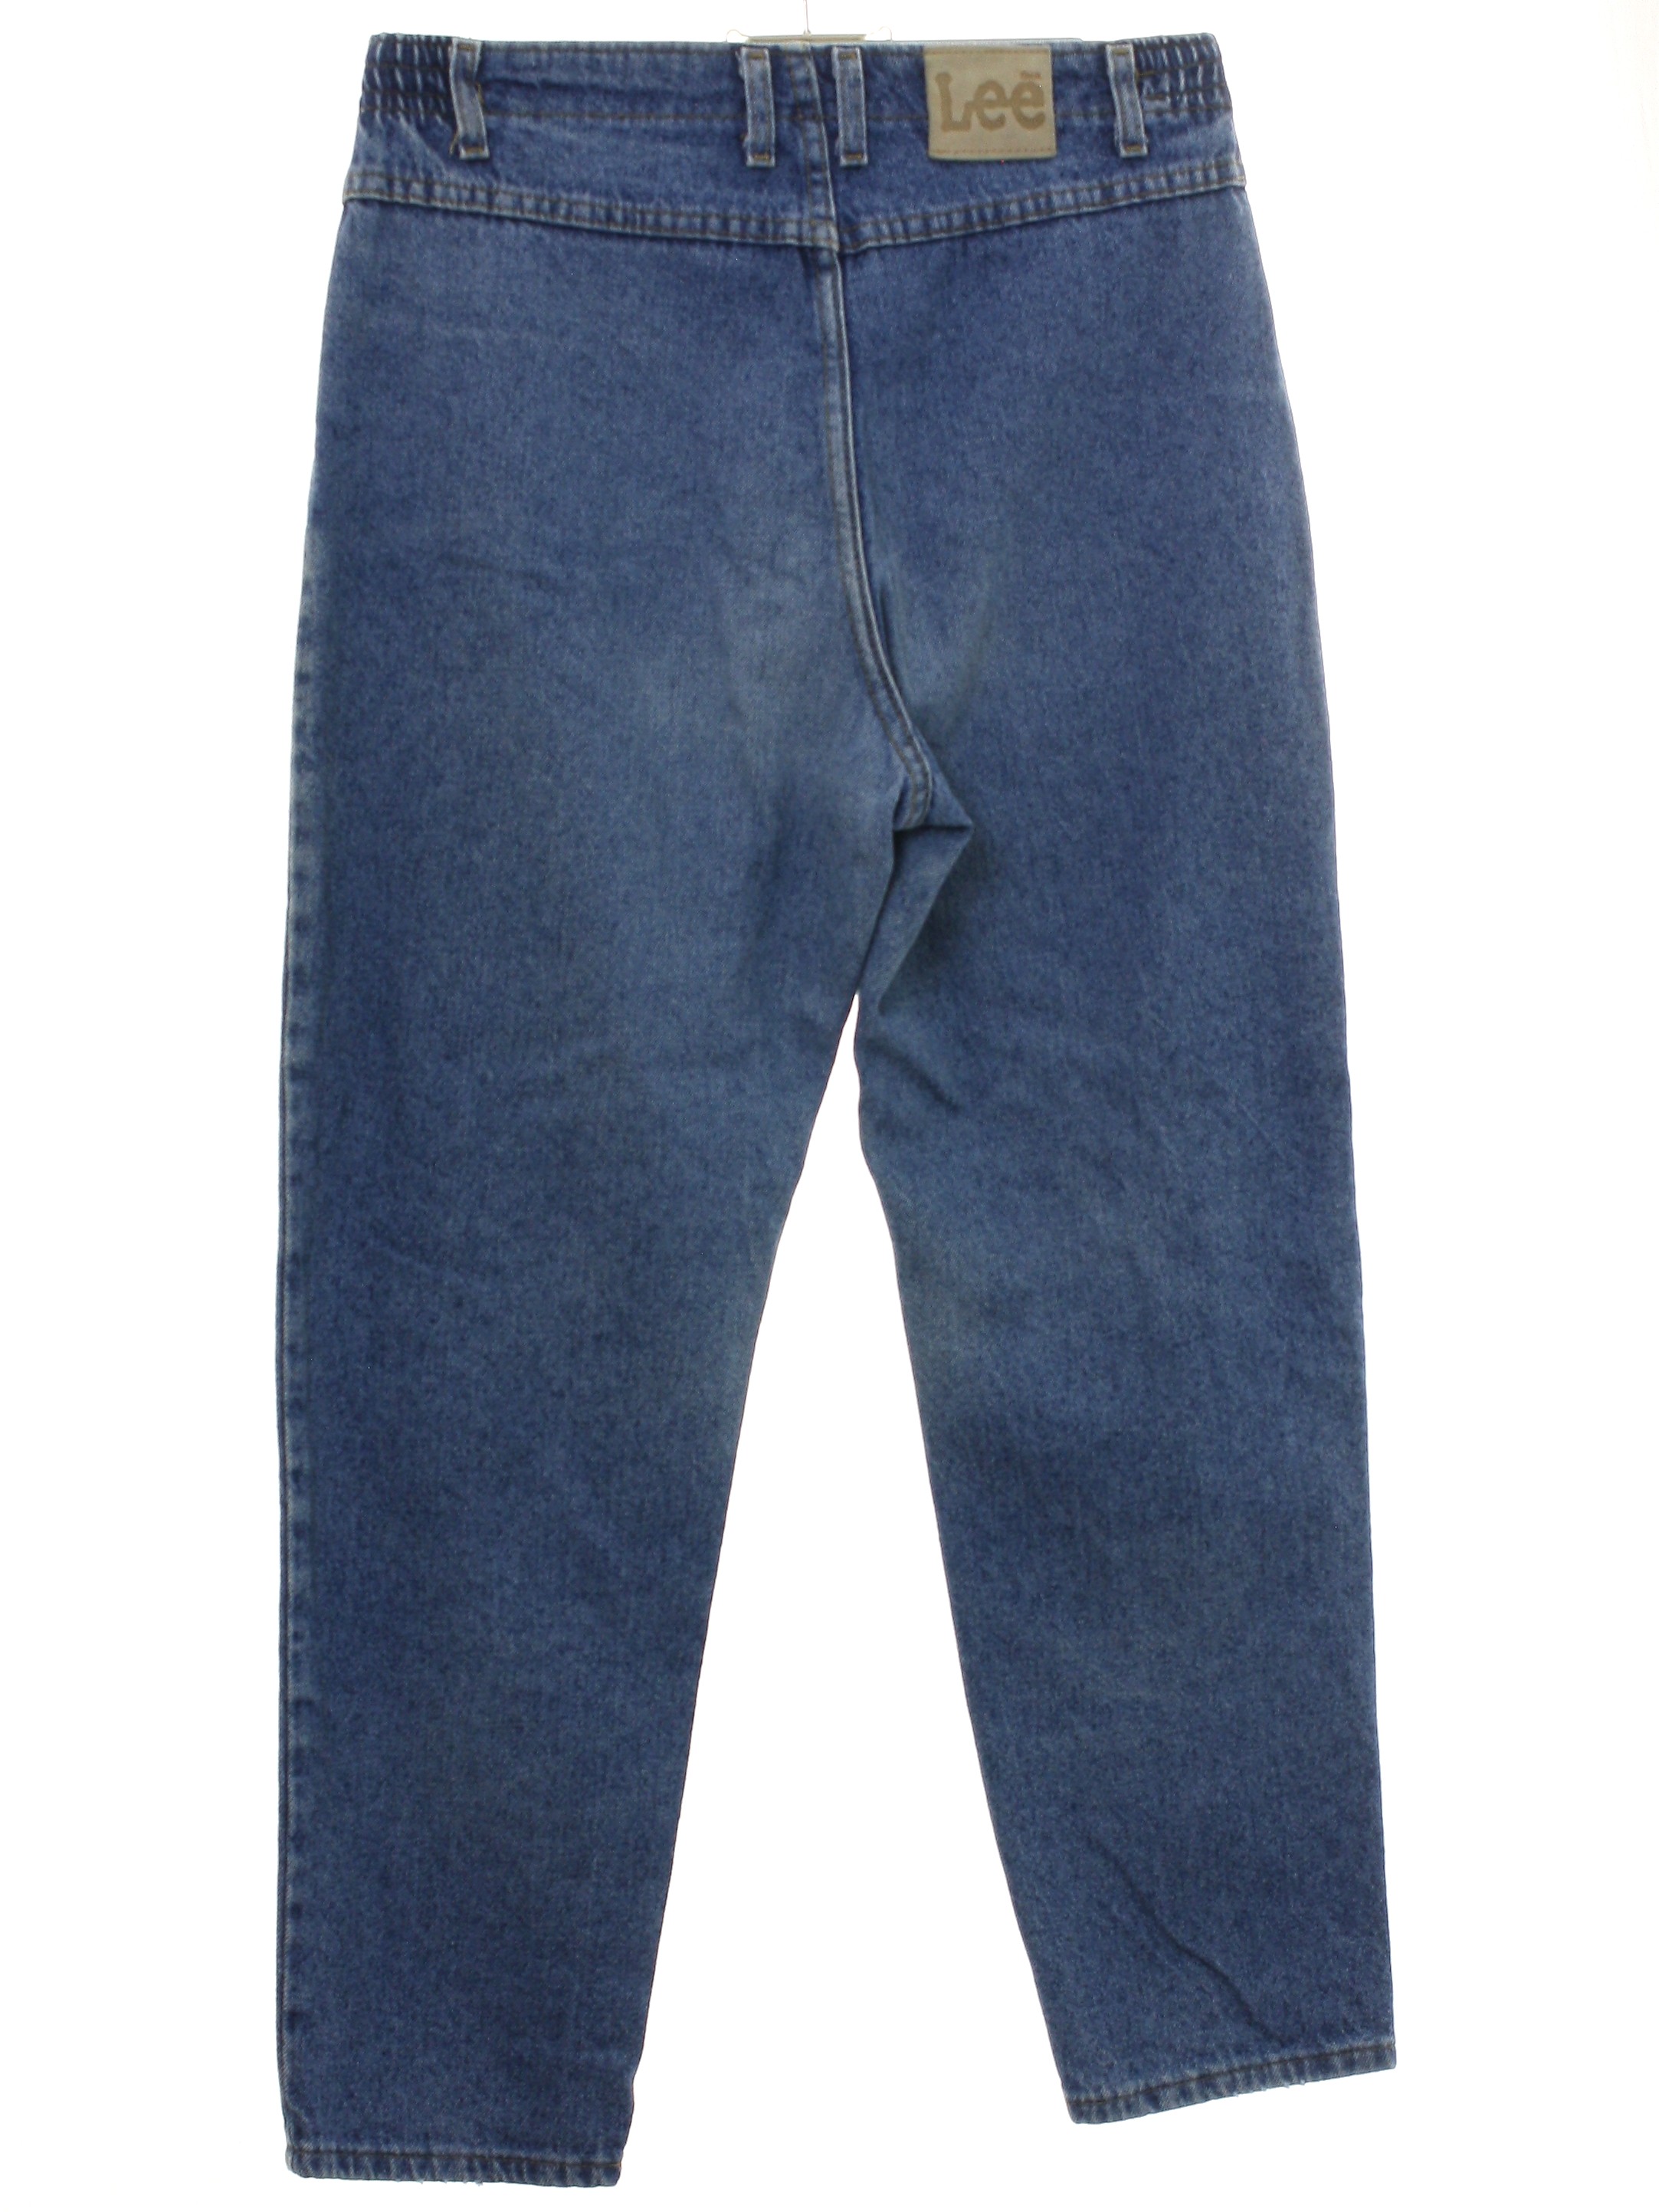 90s Retro Pants: 90s -Lee- Womens grunge faded and worn medium blue ...